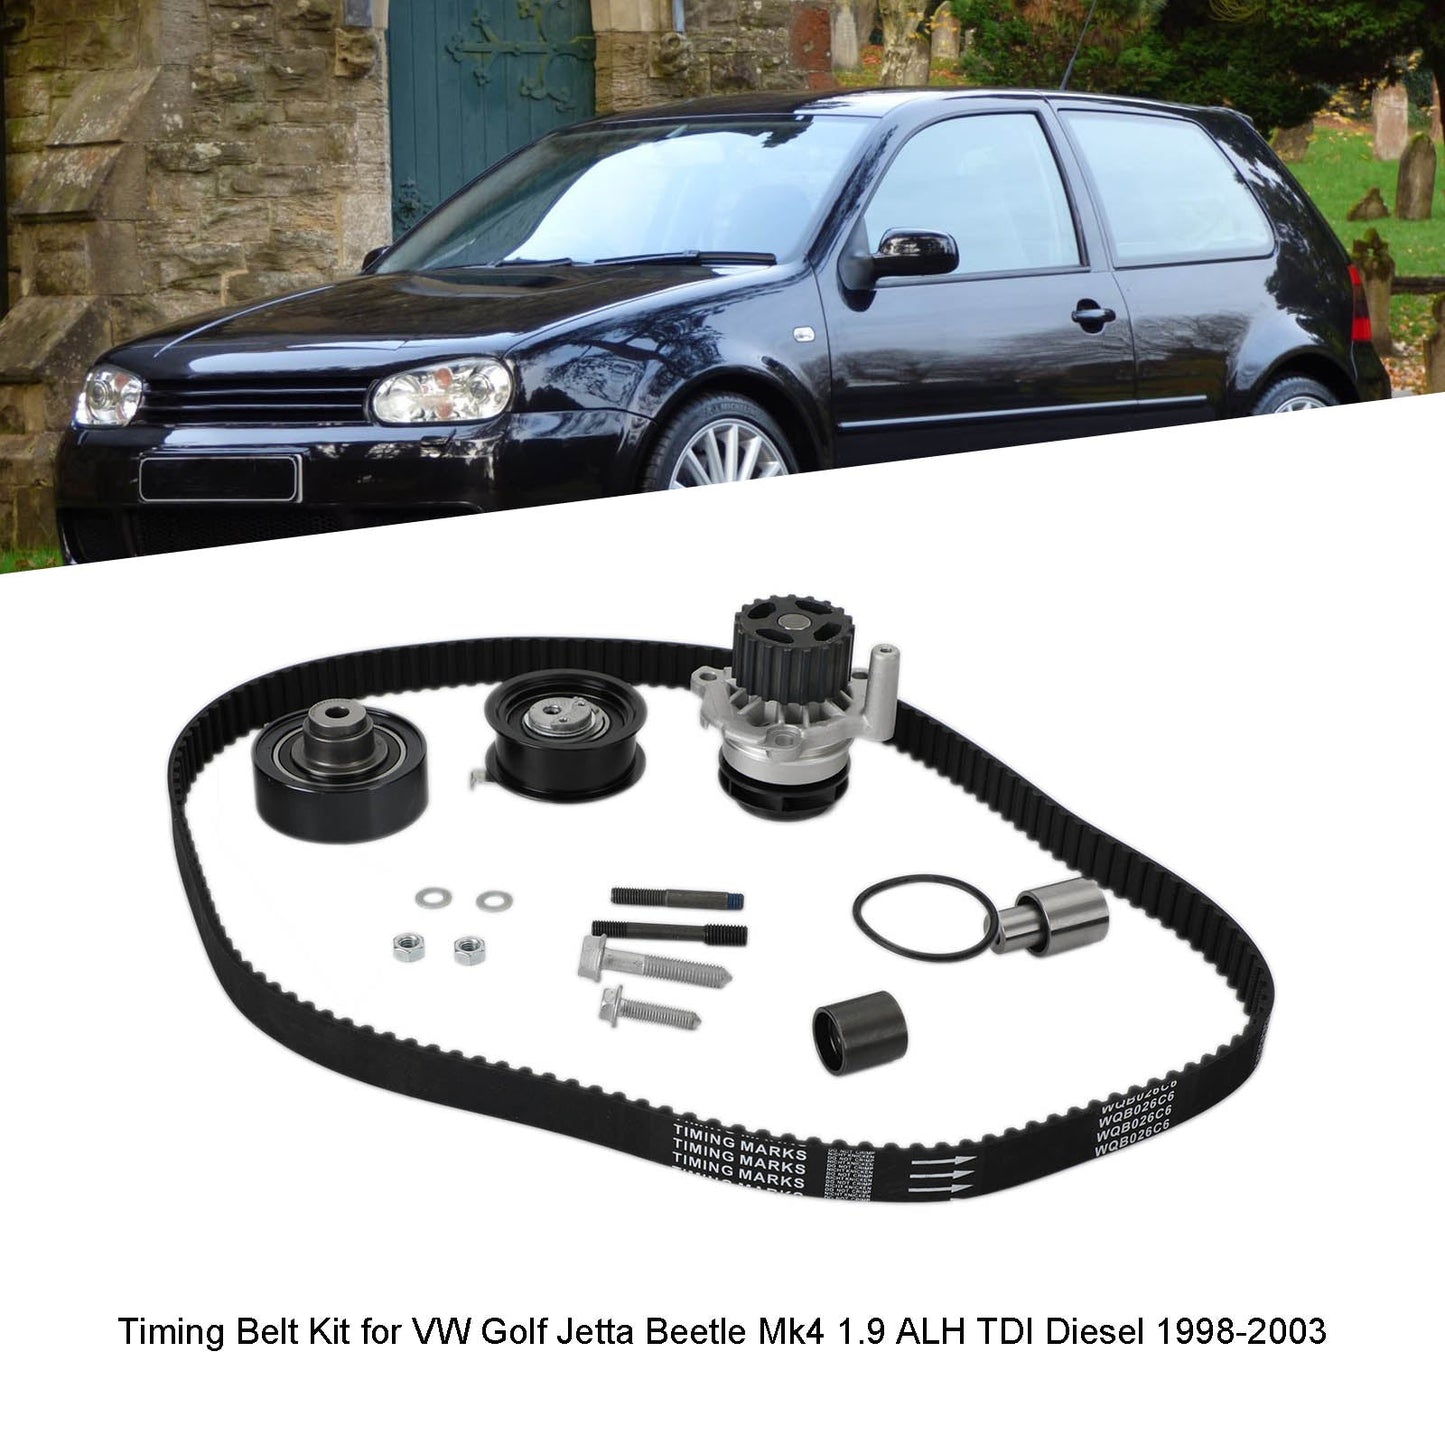 Timing Belt Kit for VW Golf Jetta Beetle Mk4 1.9 ALH TDI Diesel 1998-2003